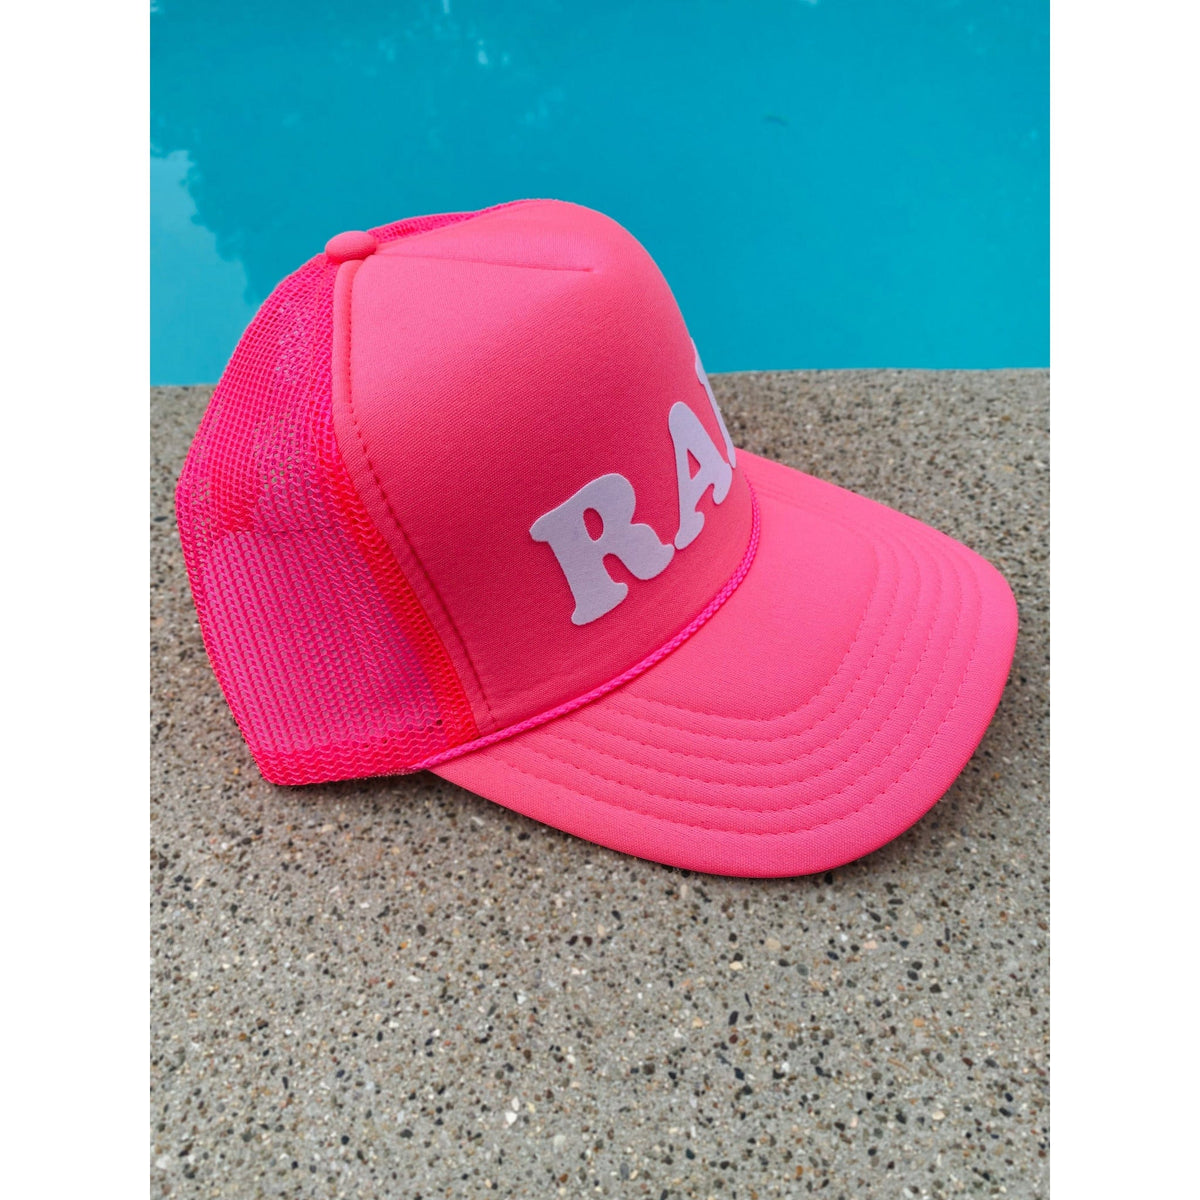 RAD Black and Pink Trucker Hat Hats TheFringeCultureCollective